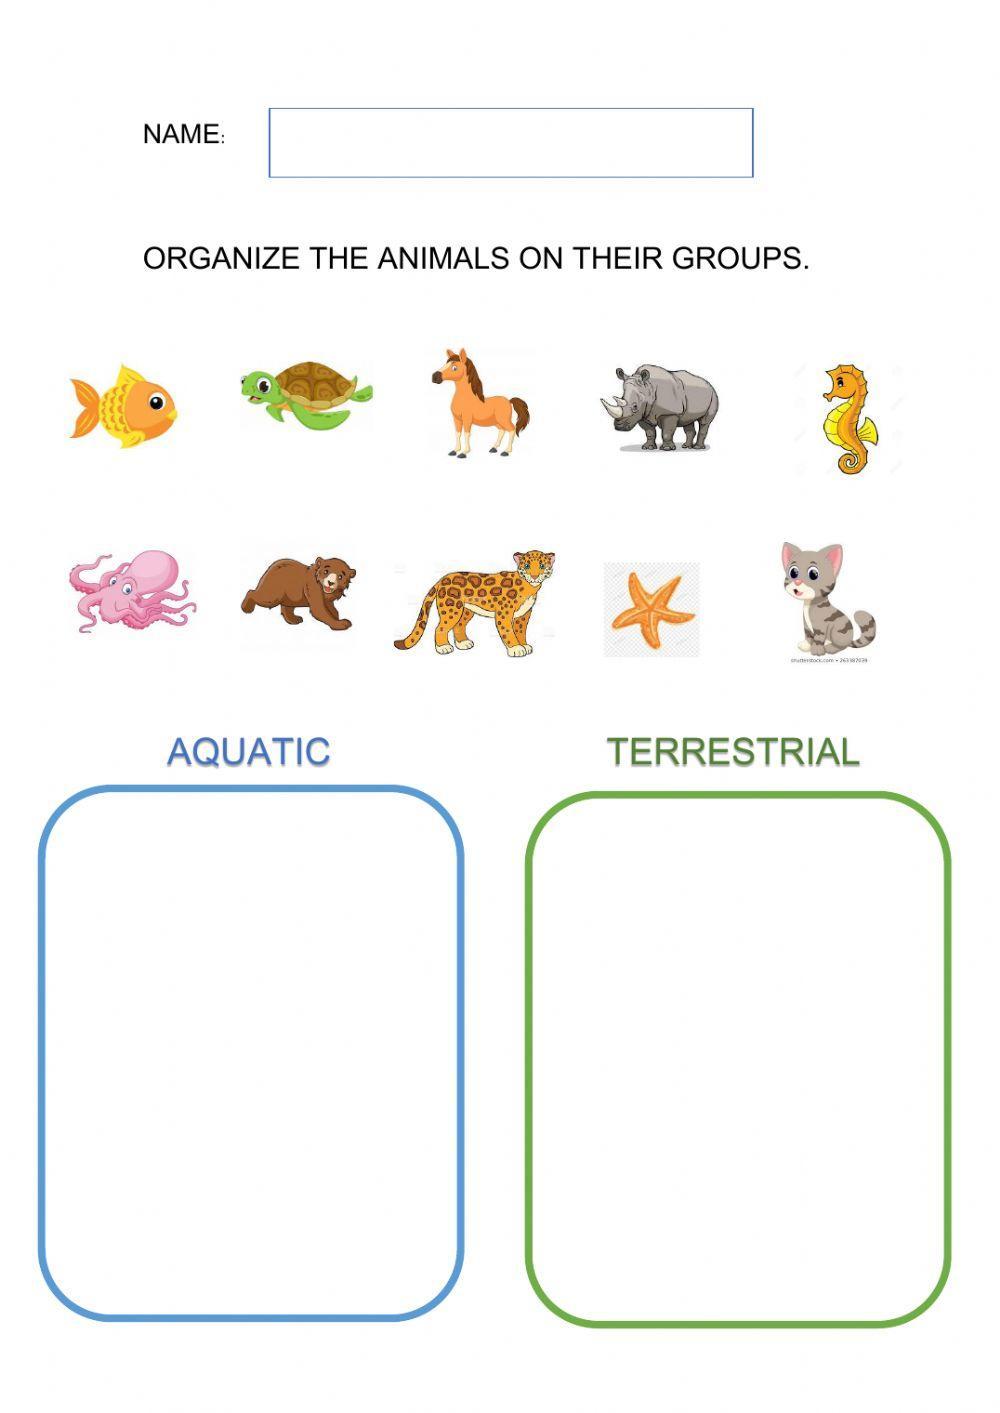 Aquatic - Terrestrial animals